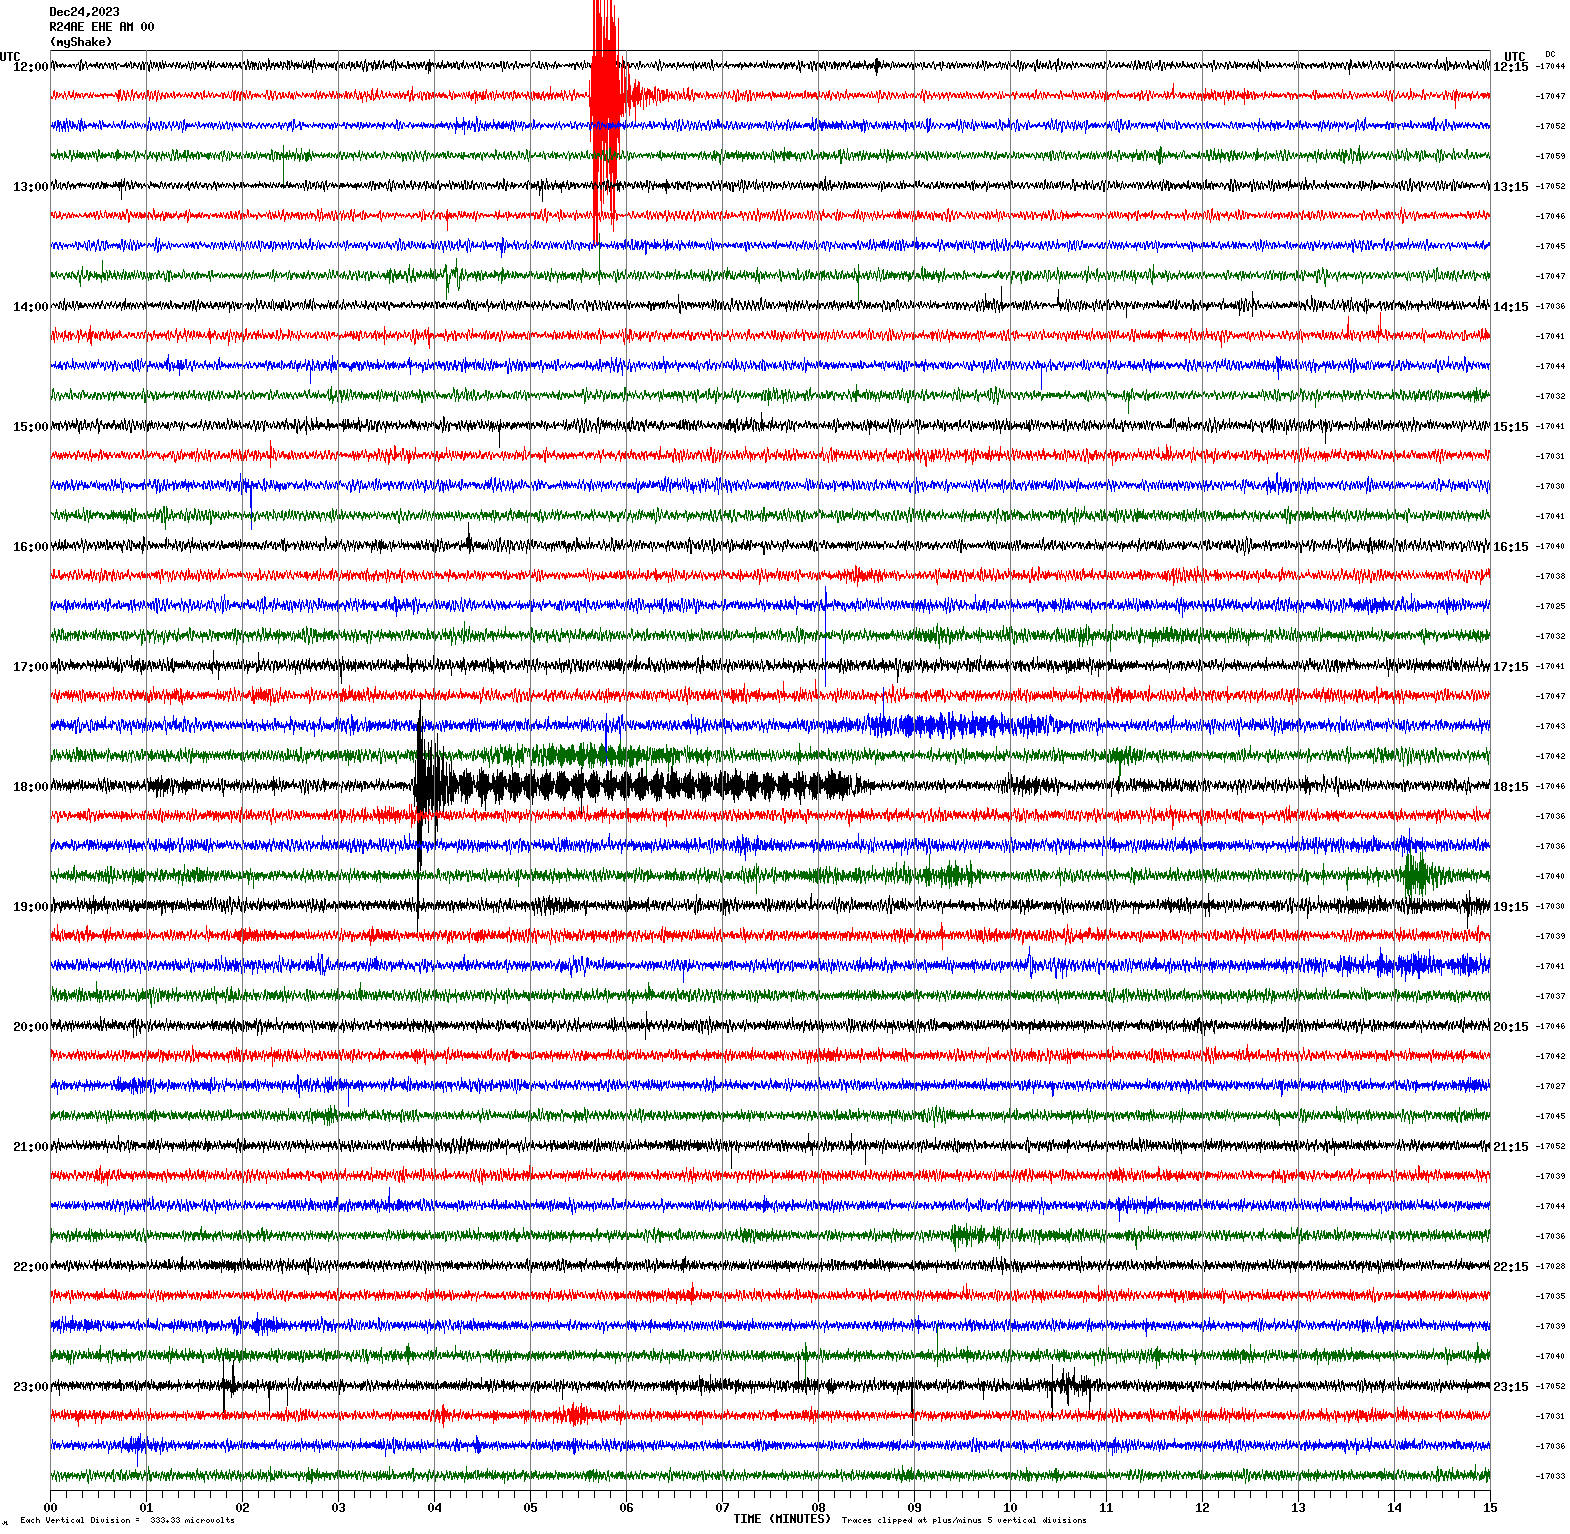 /seismic-data/R24AE/R24AE_EHE_AM_00.2023122412.gif